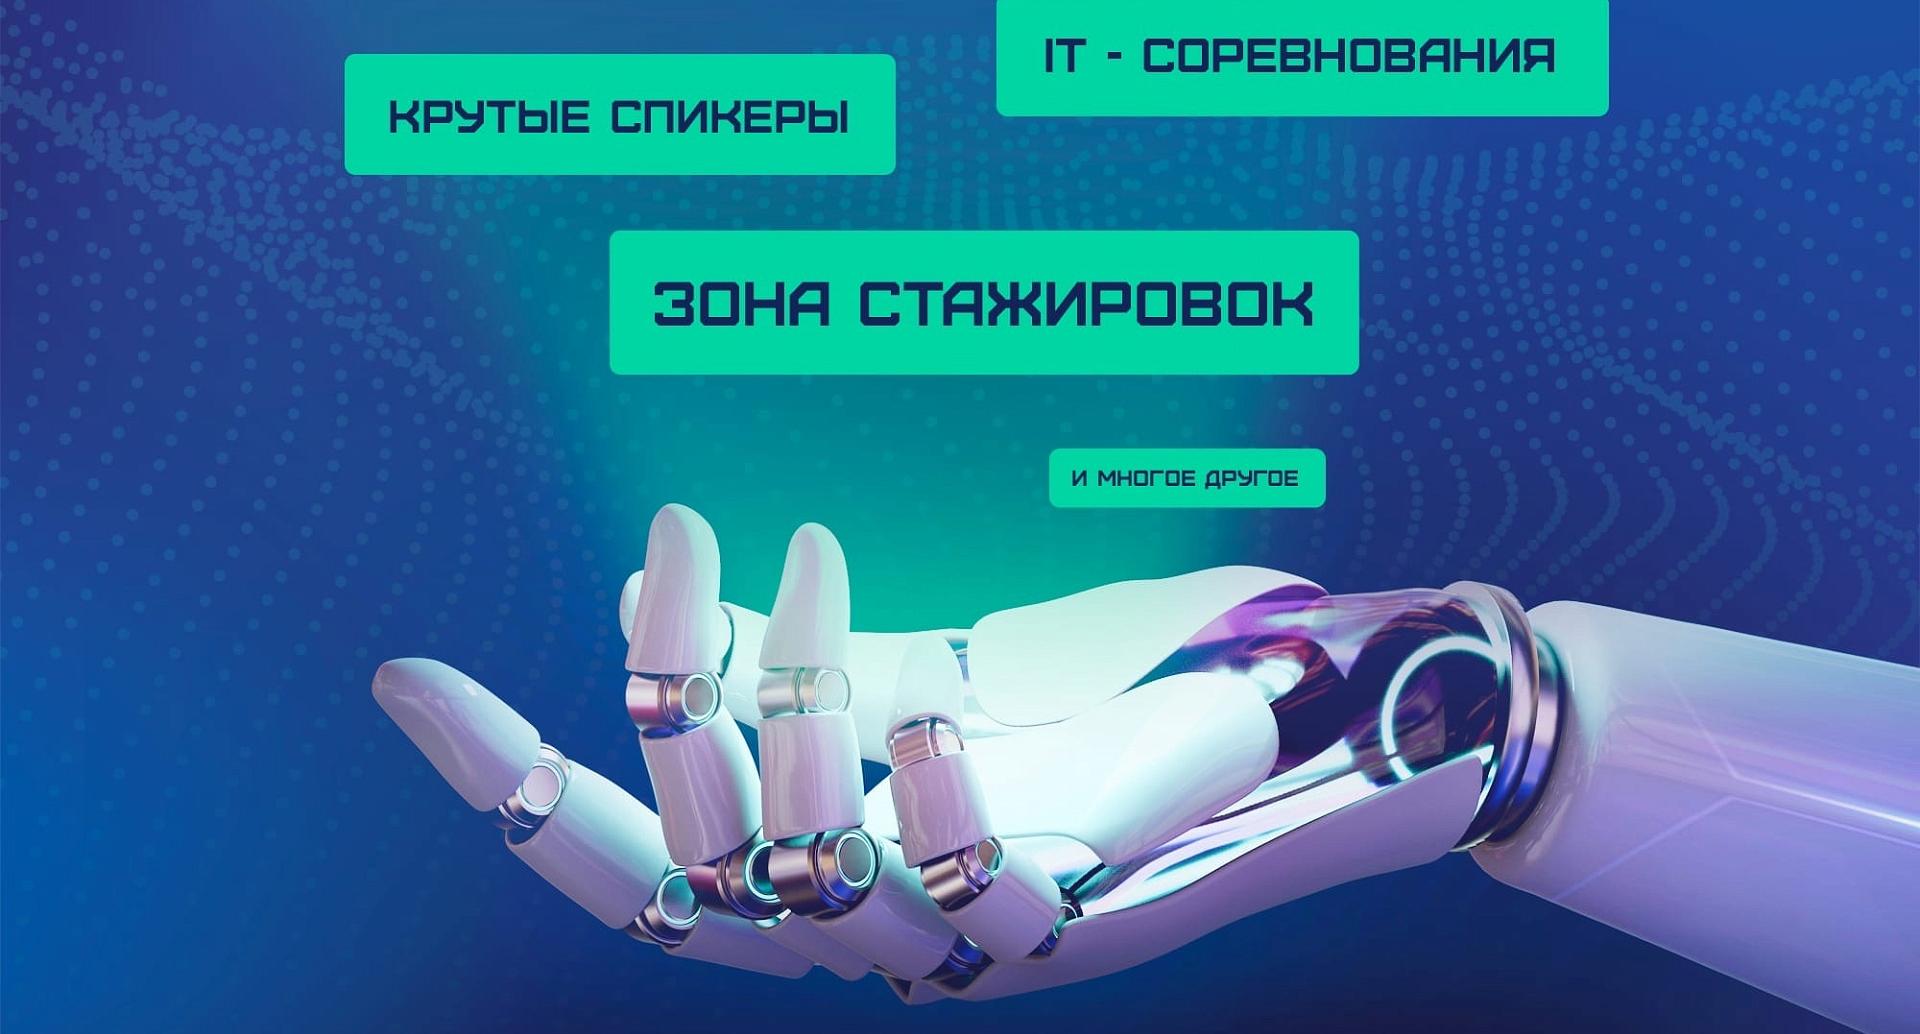 5月24日至25日——全俄科学和体育节#We_On_Connection